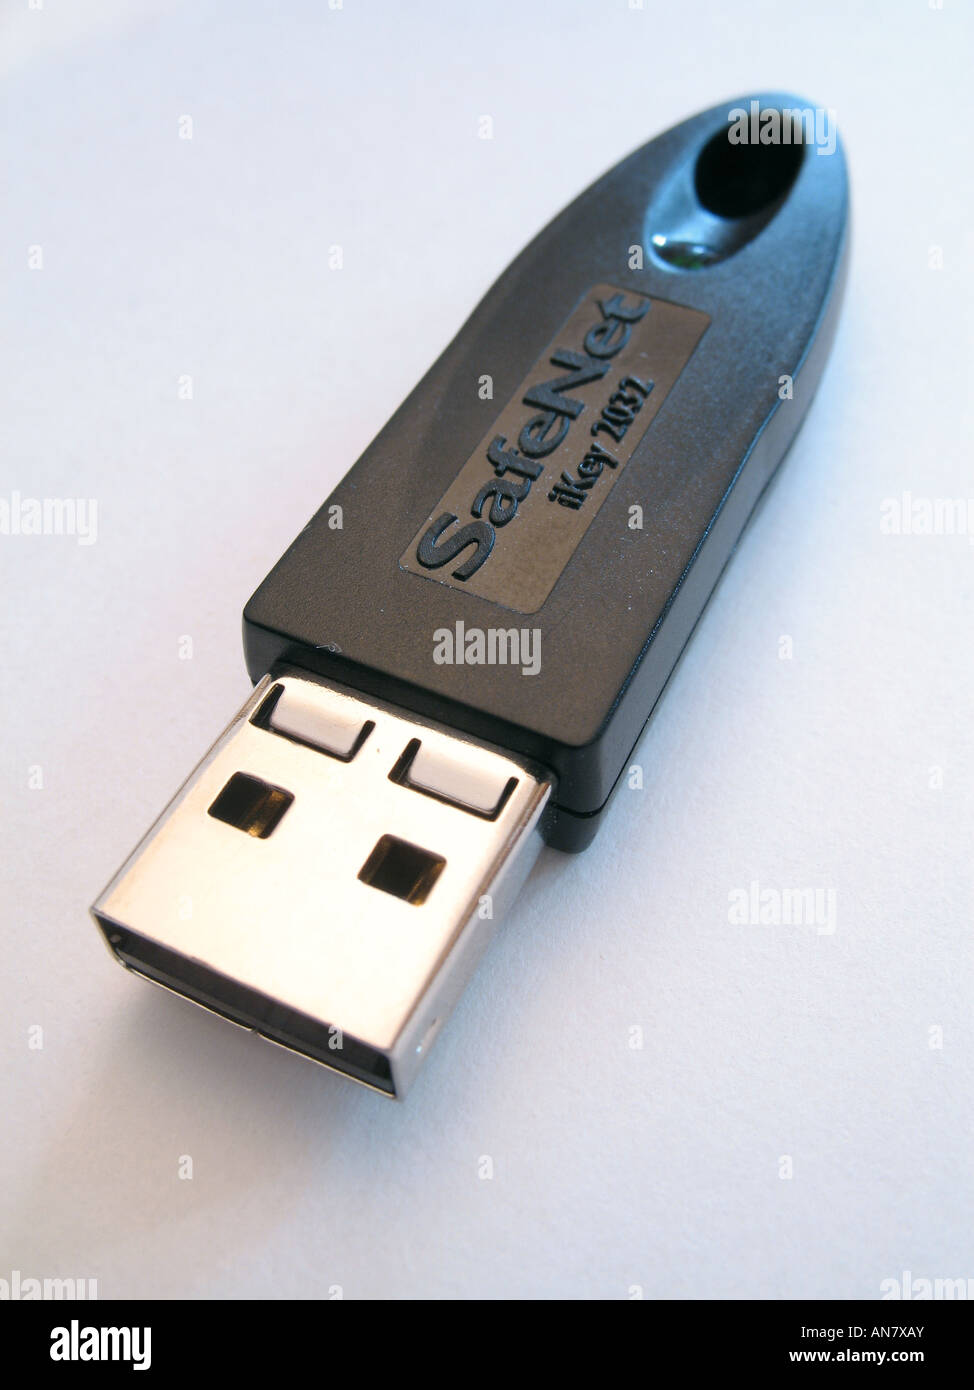 SafeNet USB security token Stock Photo - Alamy